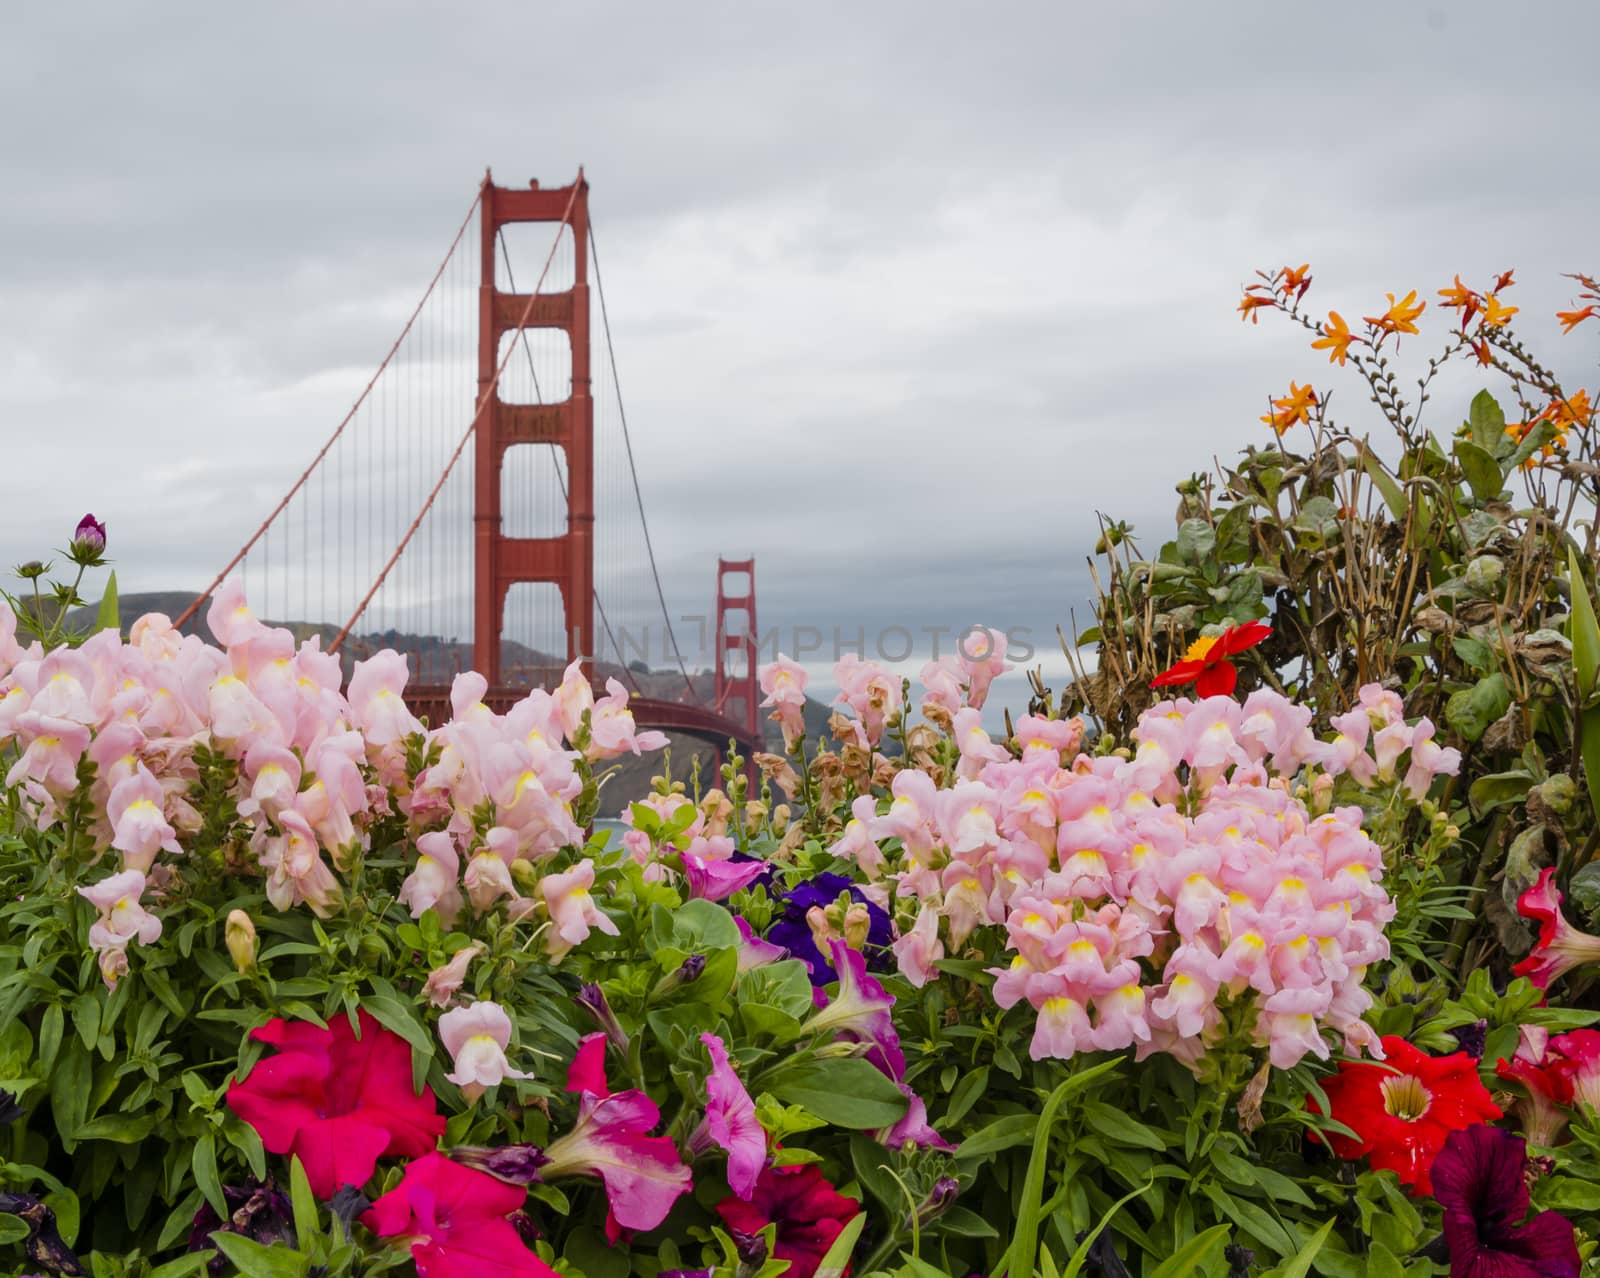 Golden Gate Bridge and flowers by rarrarorro